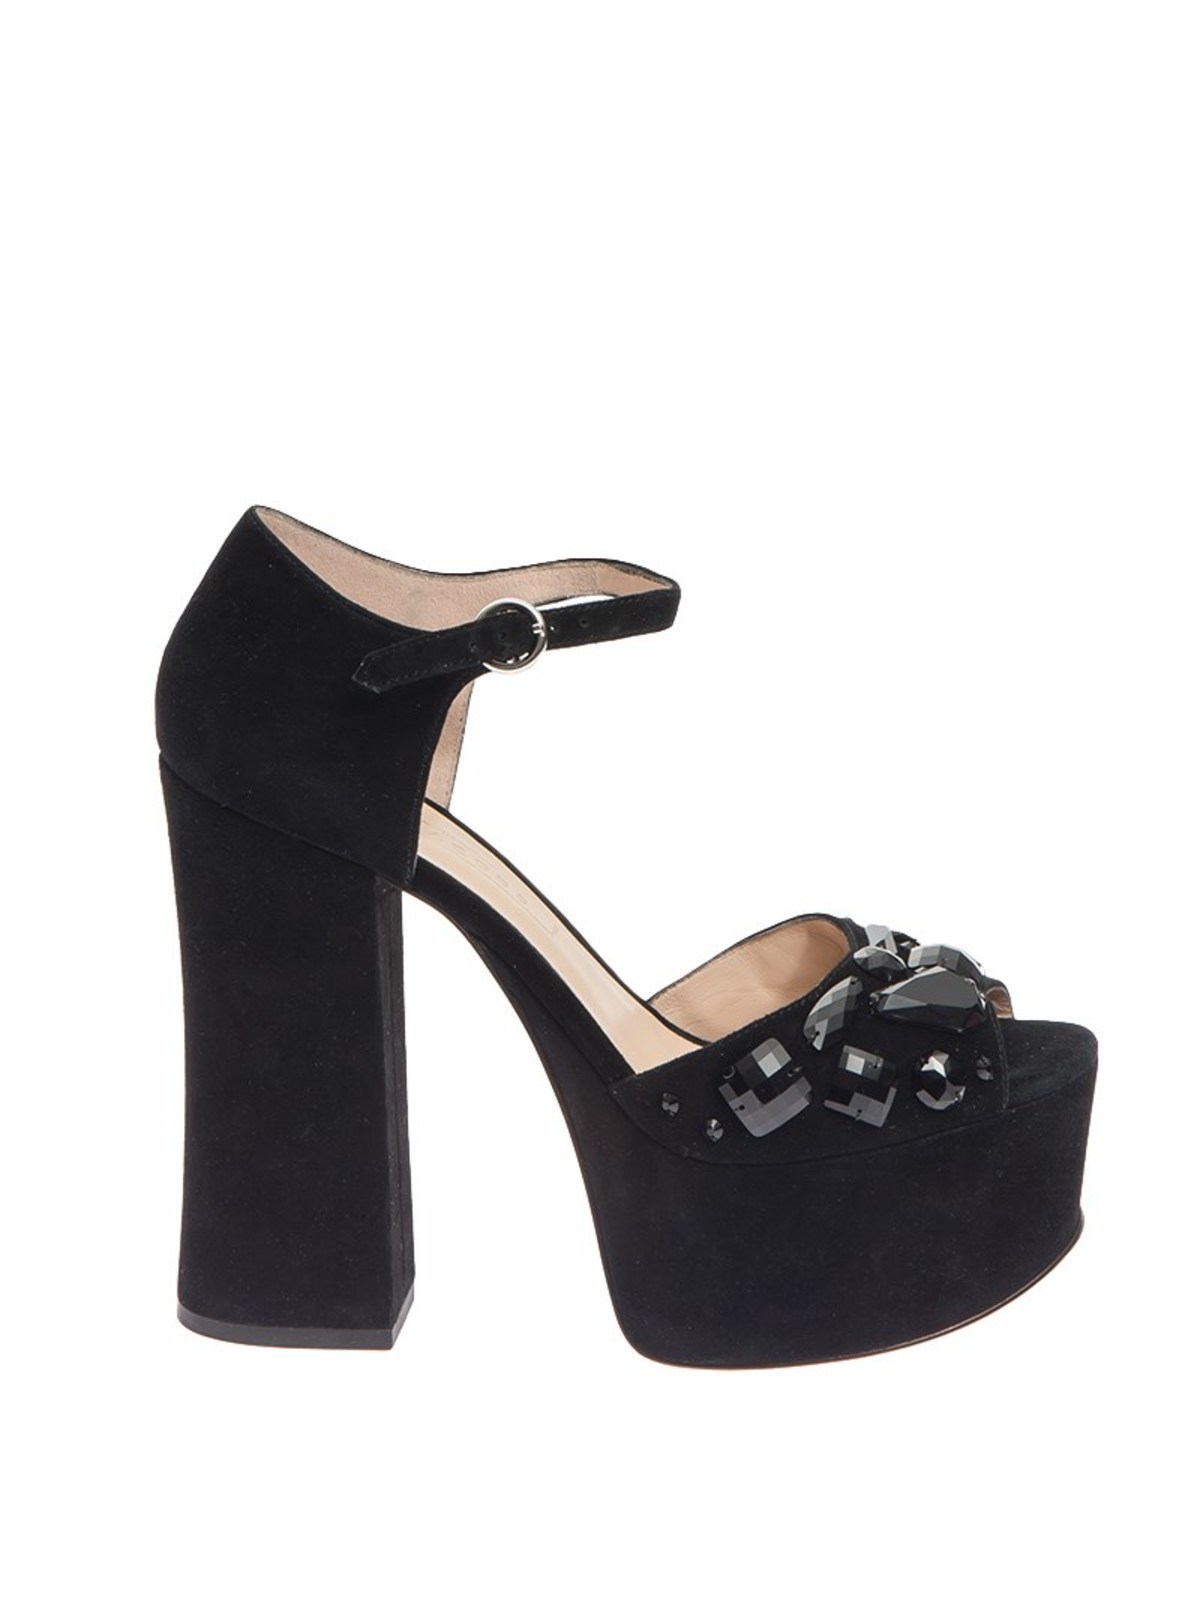 Sandals Marc Jacobs - Adriana sandals - M9001734001 | Shop online at iKRIX